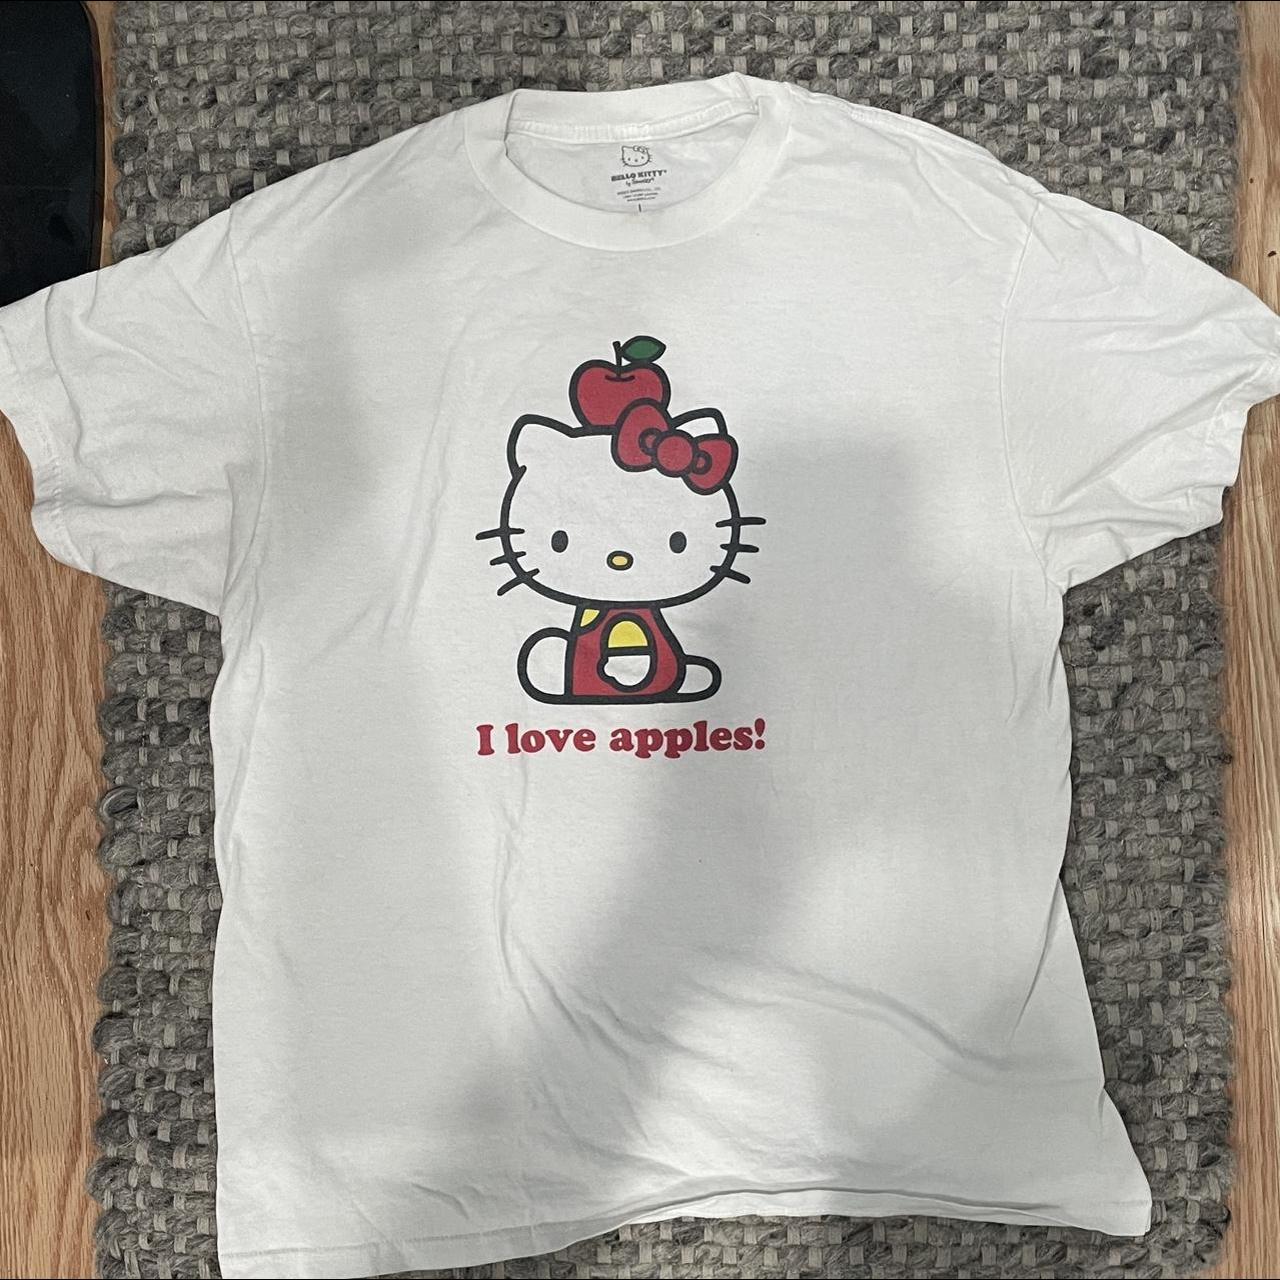 Neon Riot x Hello Kitty Apples White T-Shirt